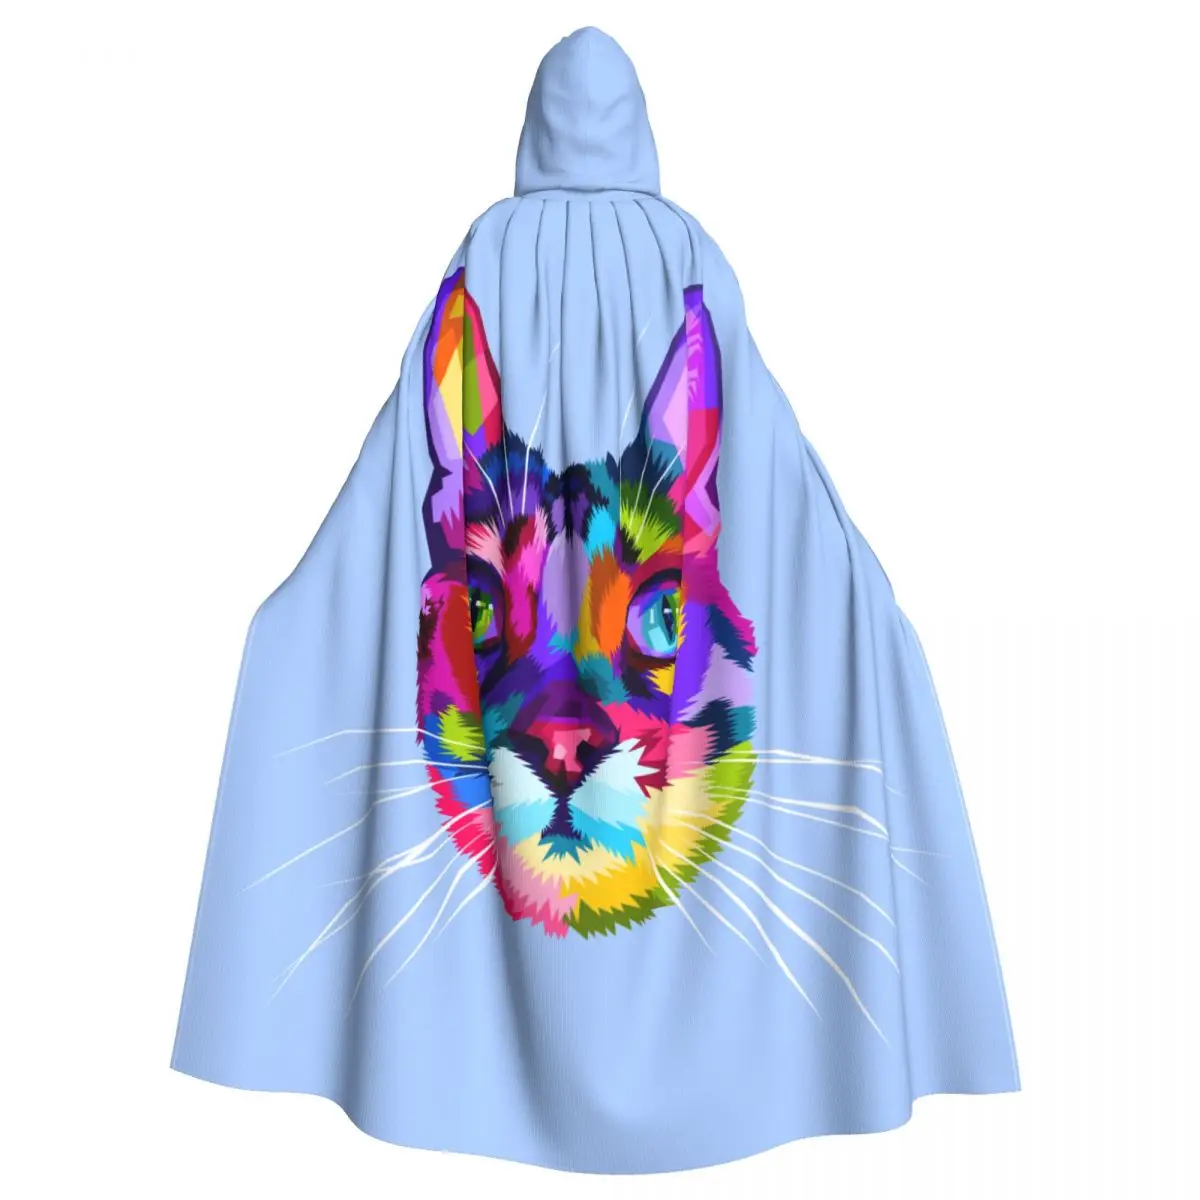 

Colorful Cat Head Pop Art Adult Cloak Cape Hooded Medieval Costume Vampire Elf Purim Carnival Party